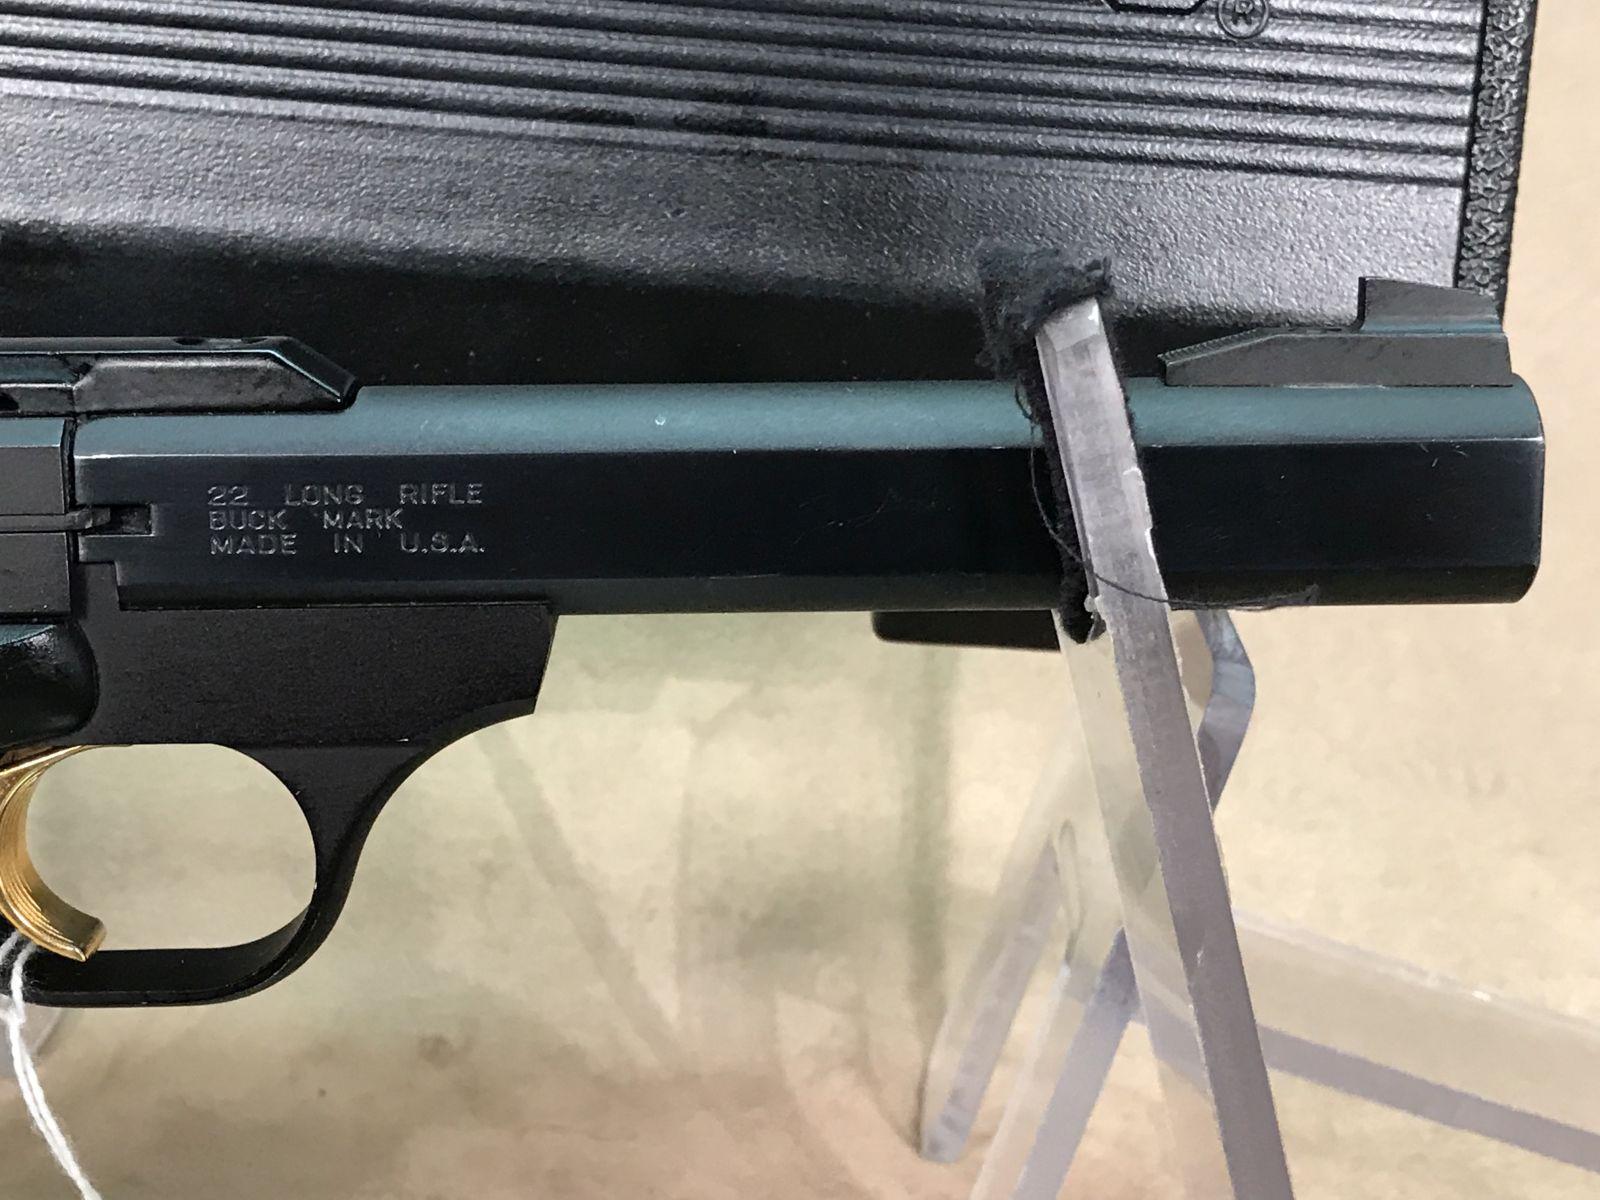 25. Browning Buck Mark .22LR, Case SN:515ZX09597